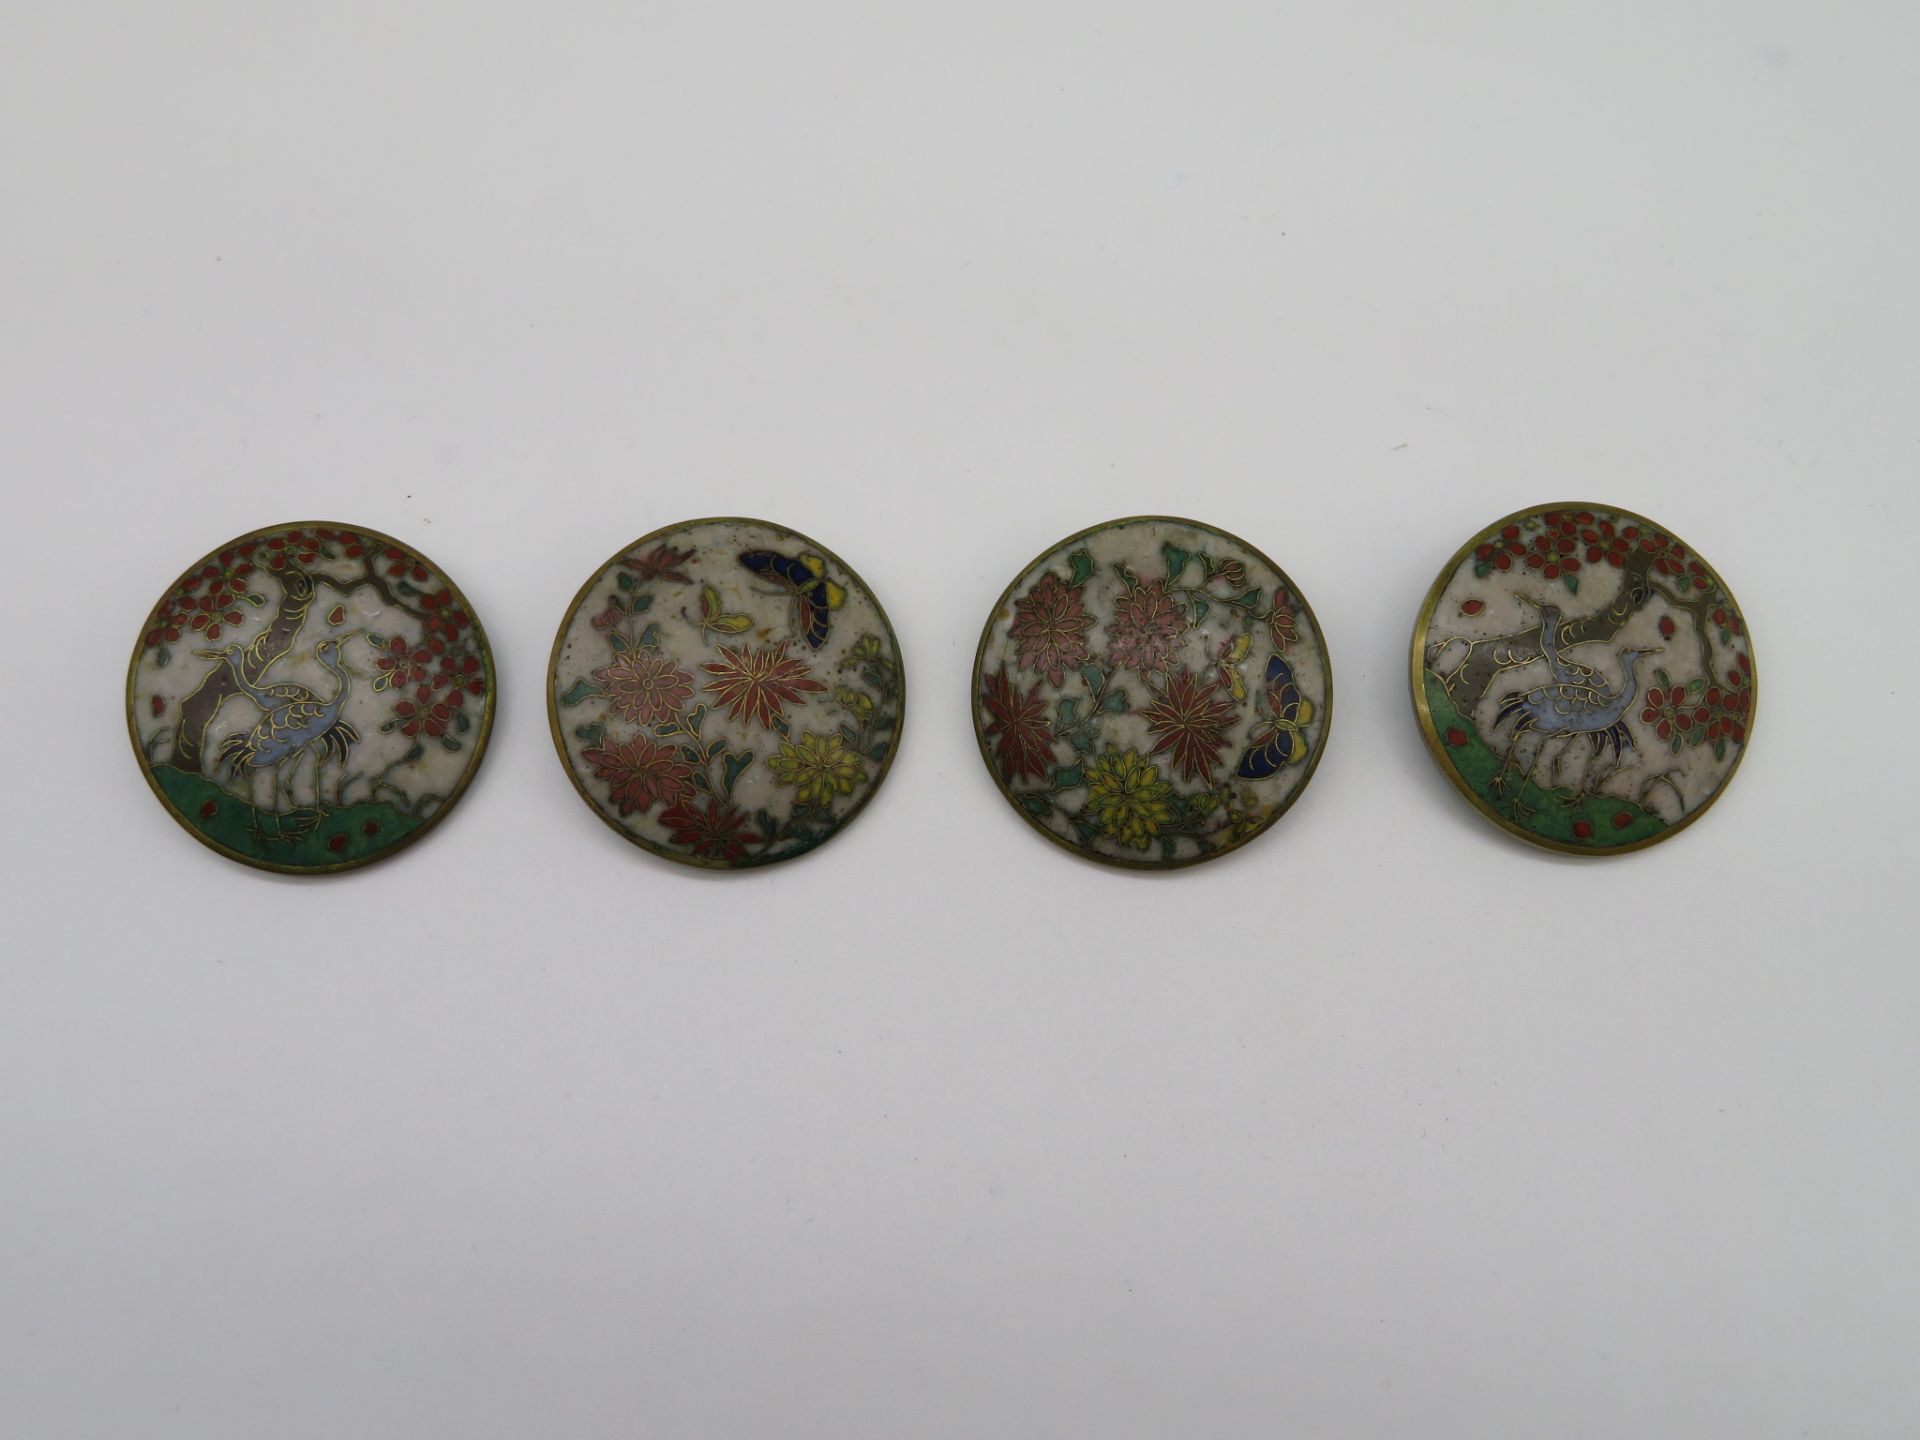 4 Cloisonné Knöpfe, Japan, farbiger Zellenschmelz, d 3,5 cm.